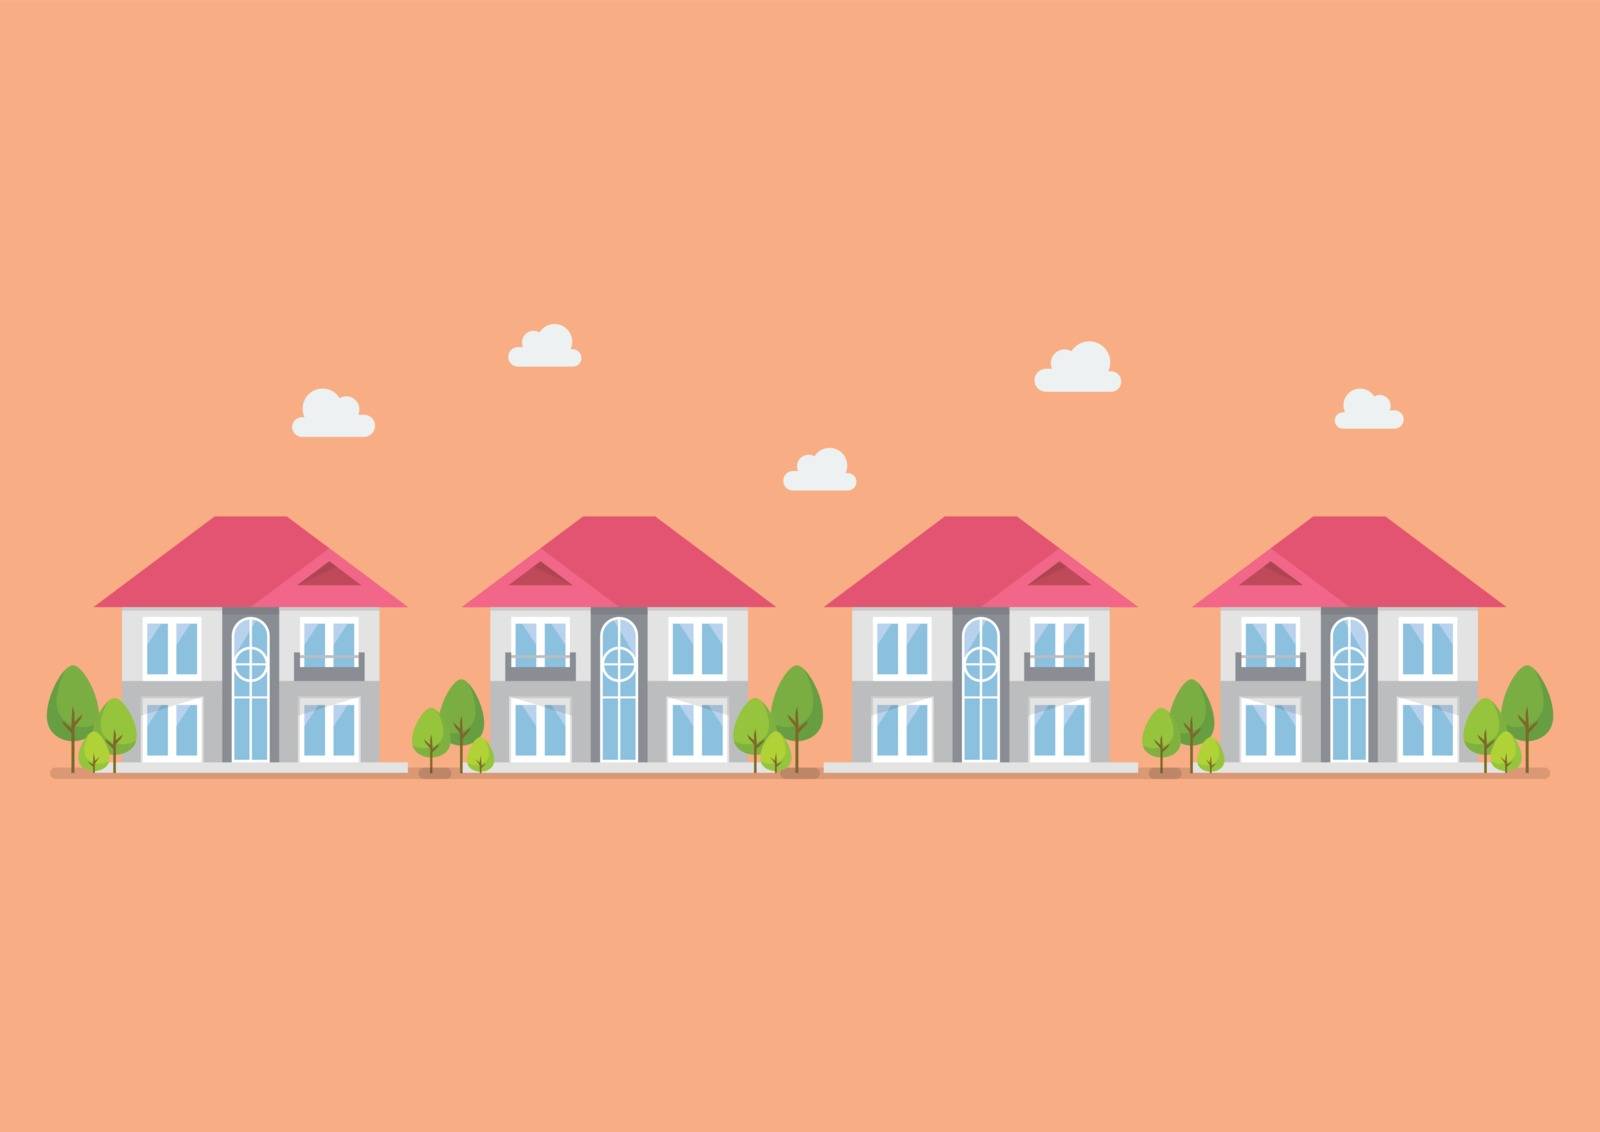 Housing development flat design icon. Vector illustration